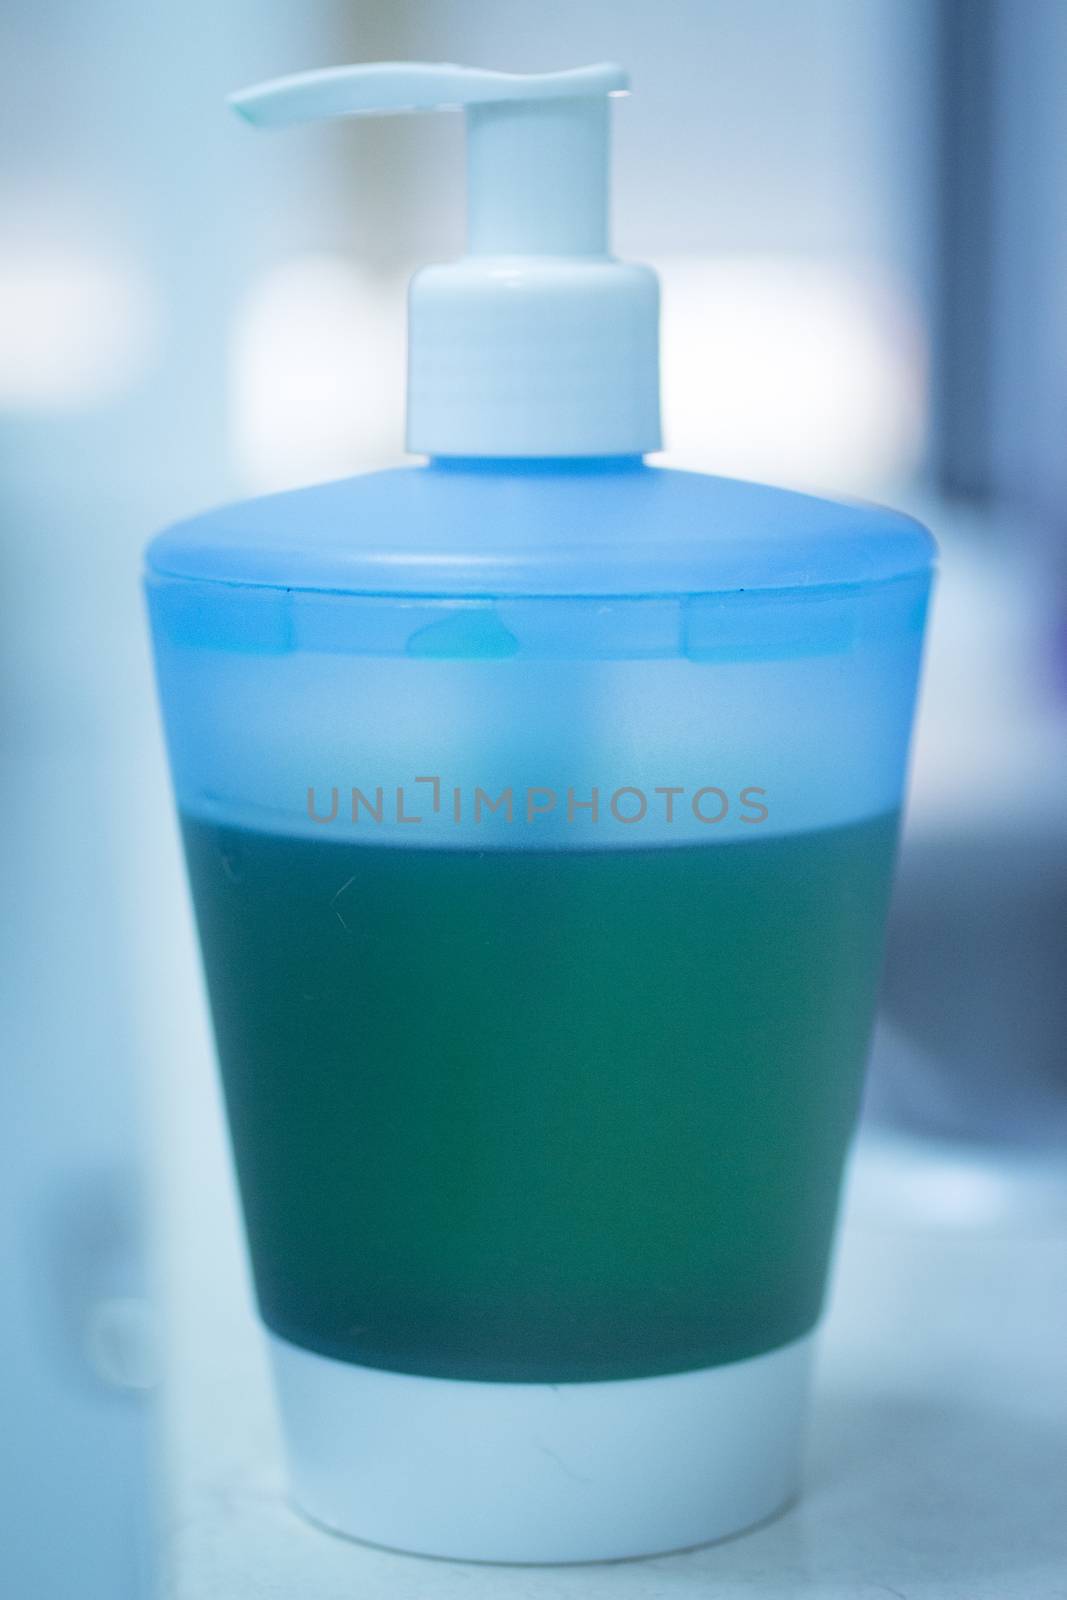 Liquid soap bottle of handwash in bathroom phtoo in blue and green.